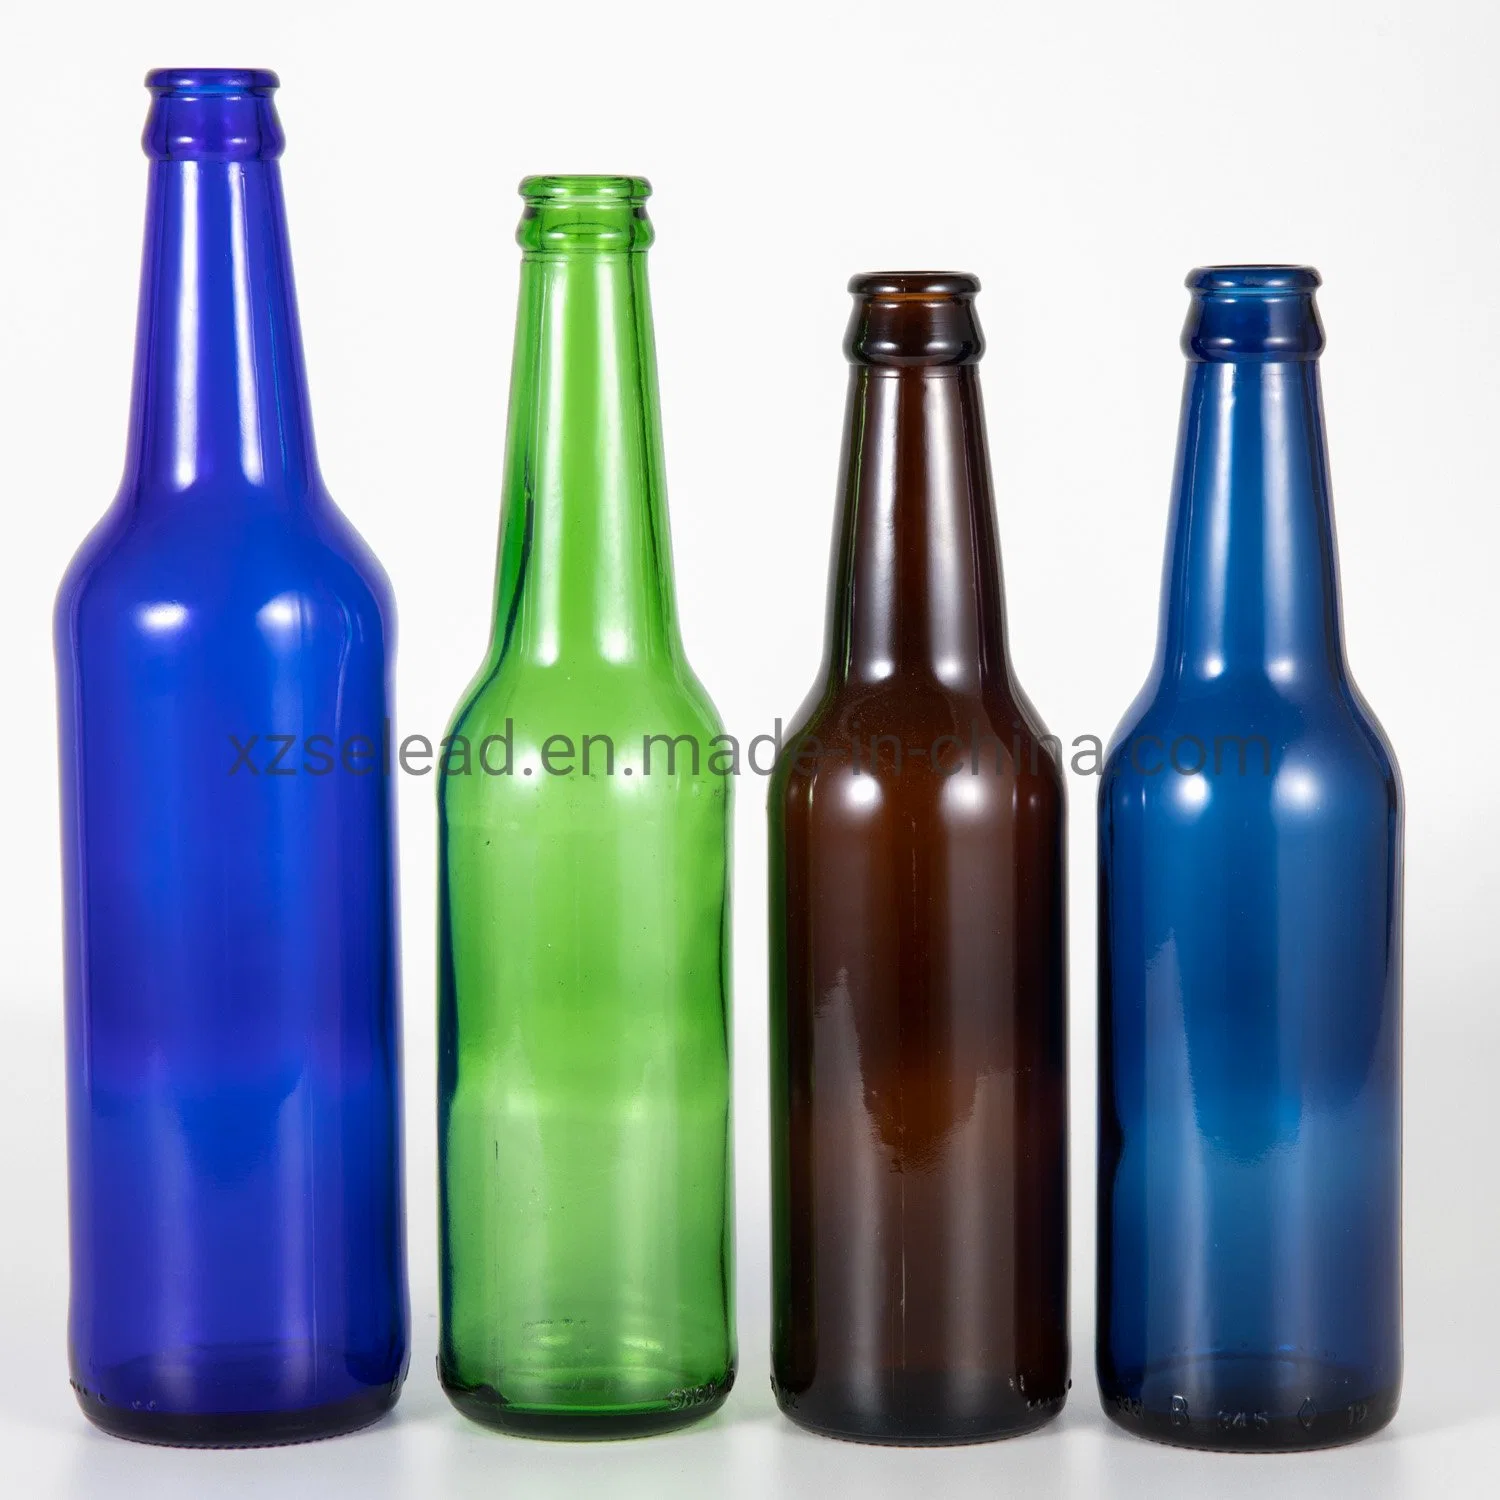 Amber Beer Bottle Craft Beer Wine Glass Bottle with Crown Cap 33cl 50cl 65cl